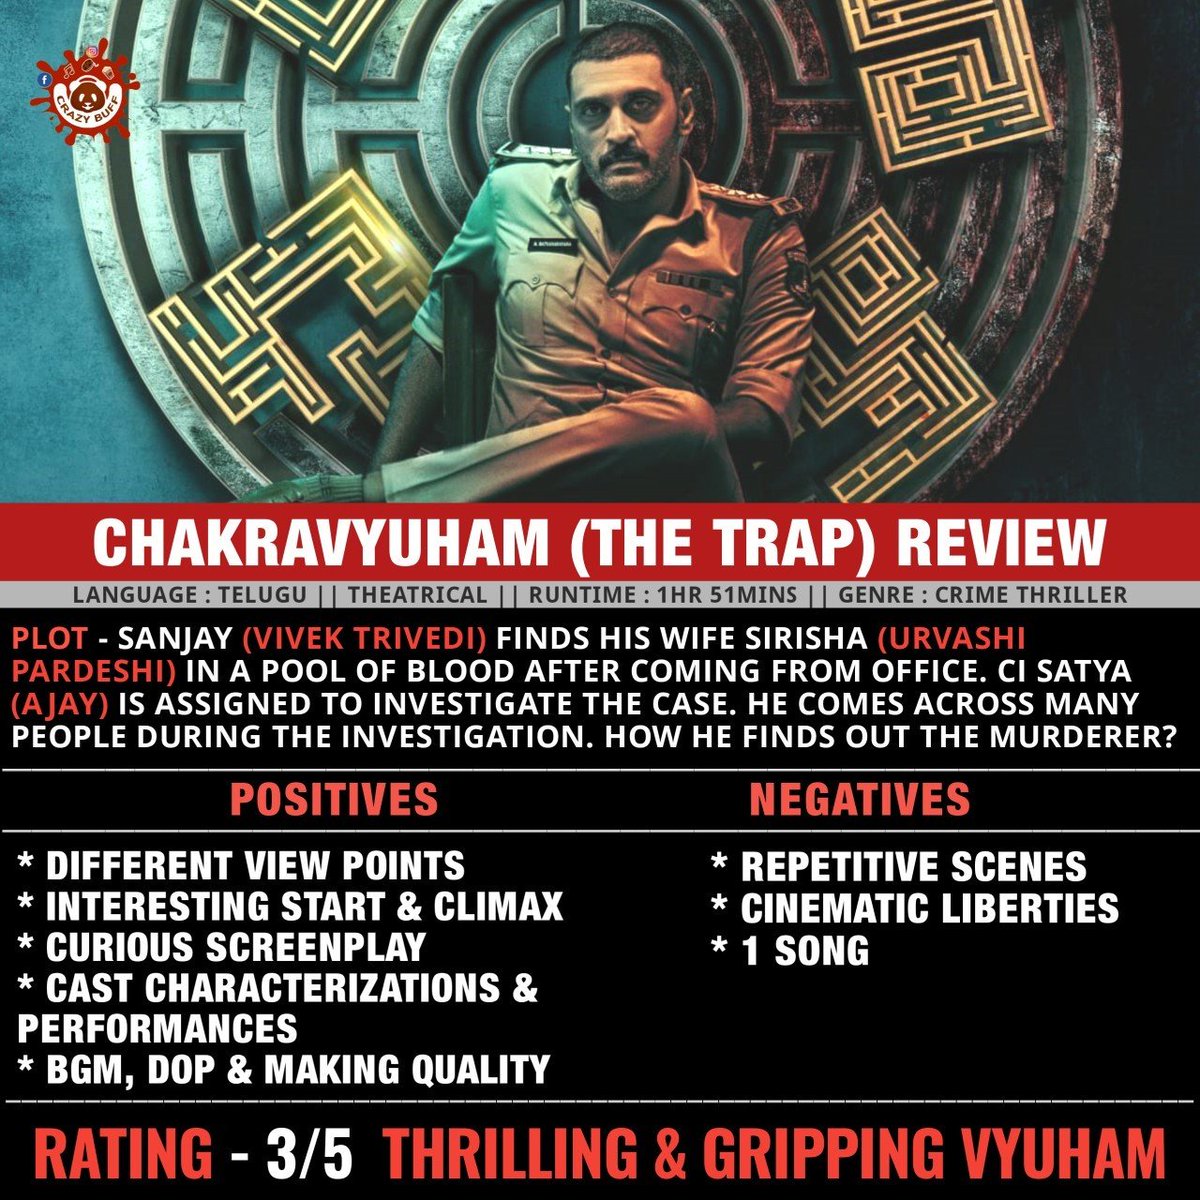 #Ajay #GnaneswariKandregula #VivekTrivedi and #UrvashiParadeshi's #Chakravyuham Movie Review

#Chetkurimadhusudhan #ChakravyuhamReview #CrazyBuffReviews @GnaneswariKand2